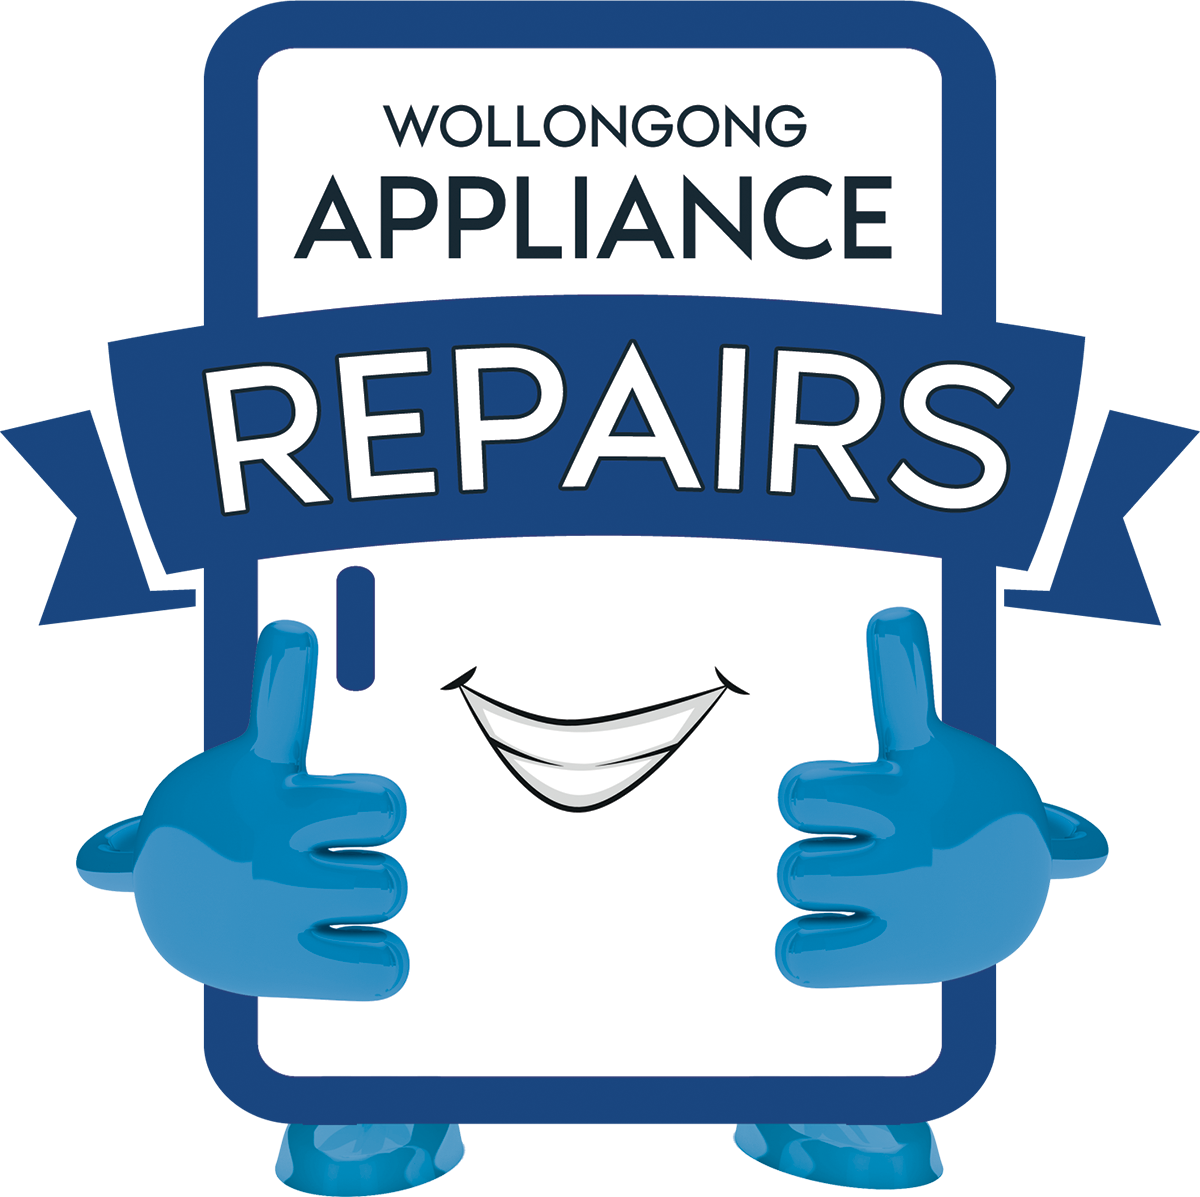 Wollongong appliance repairs